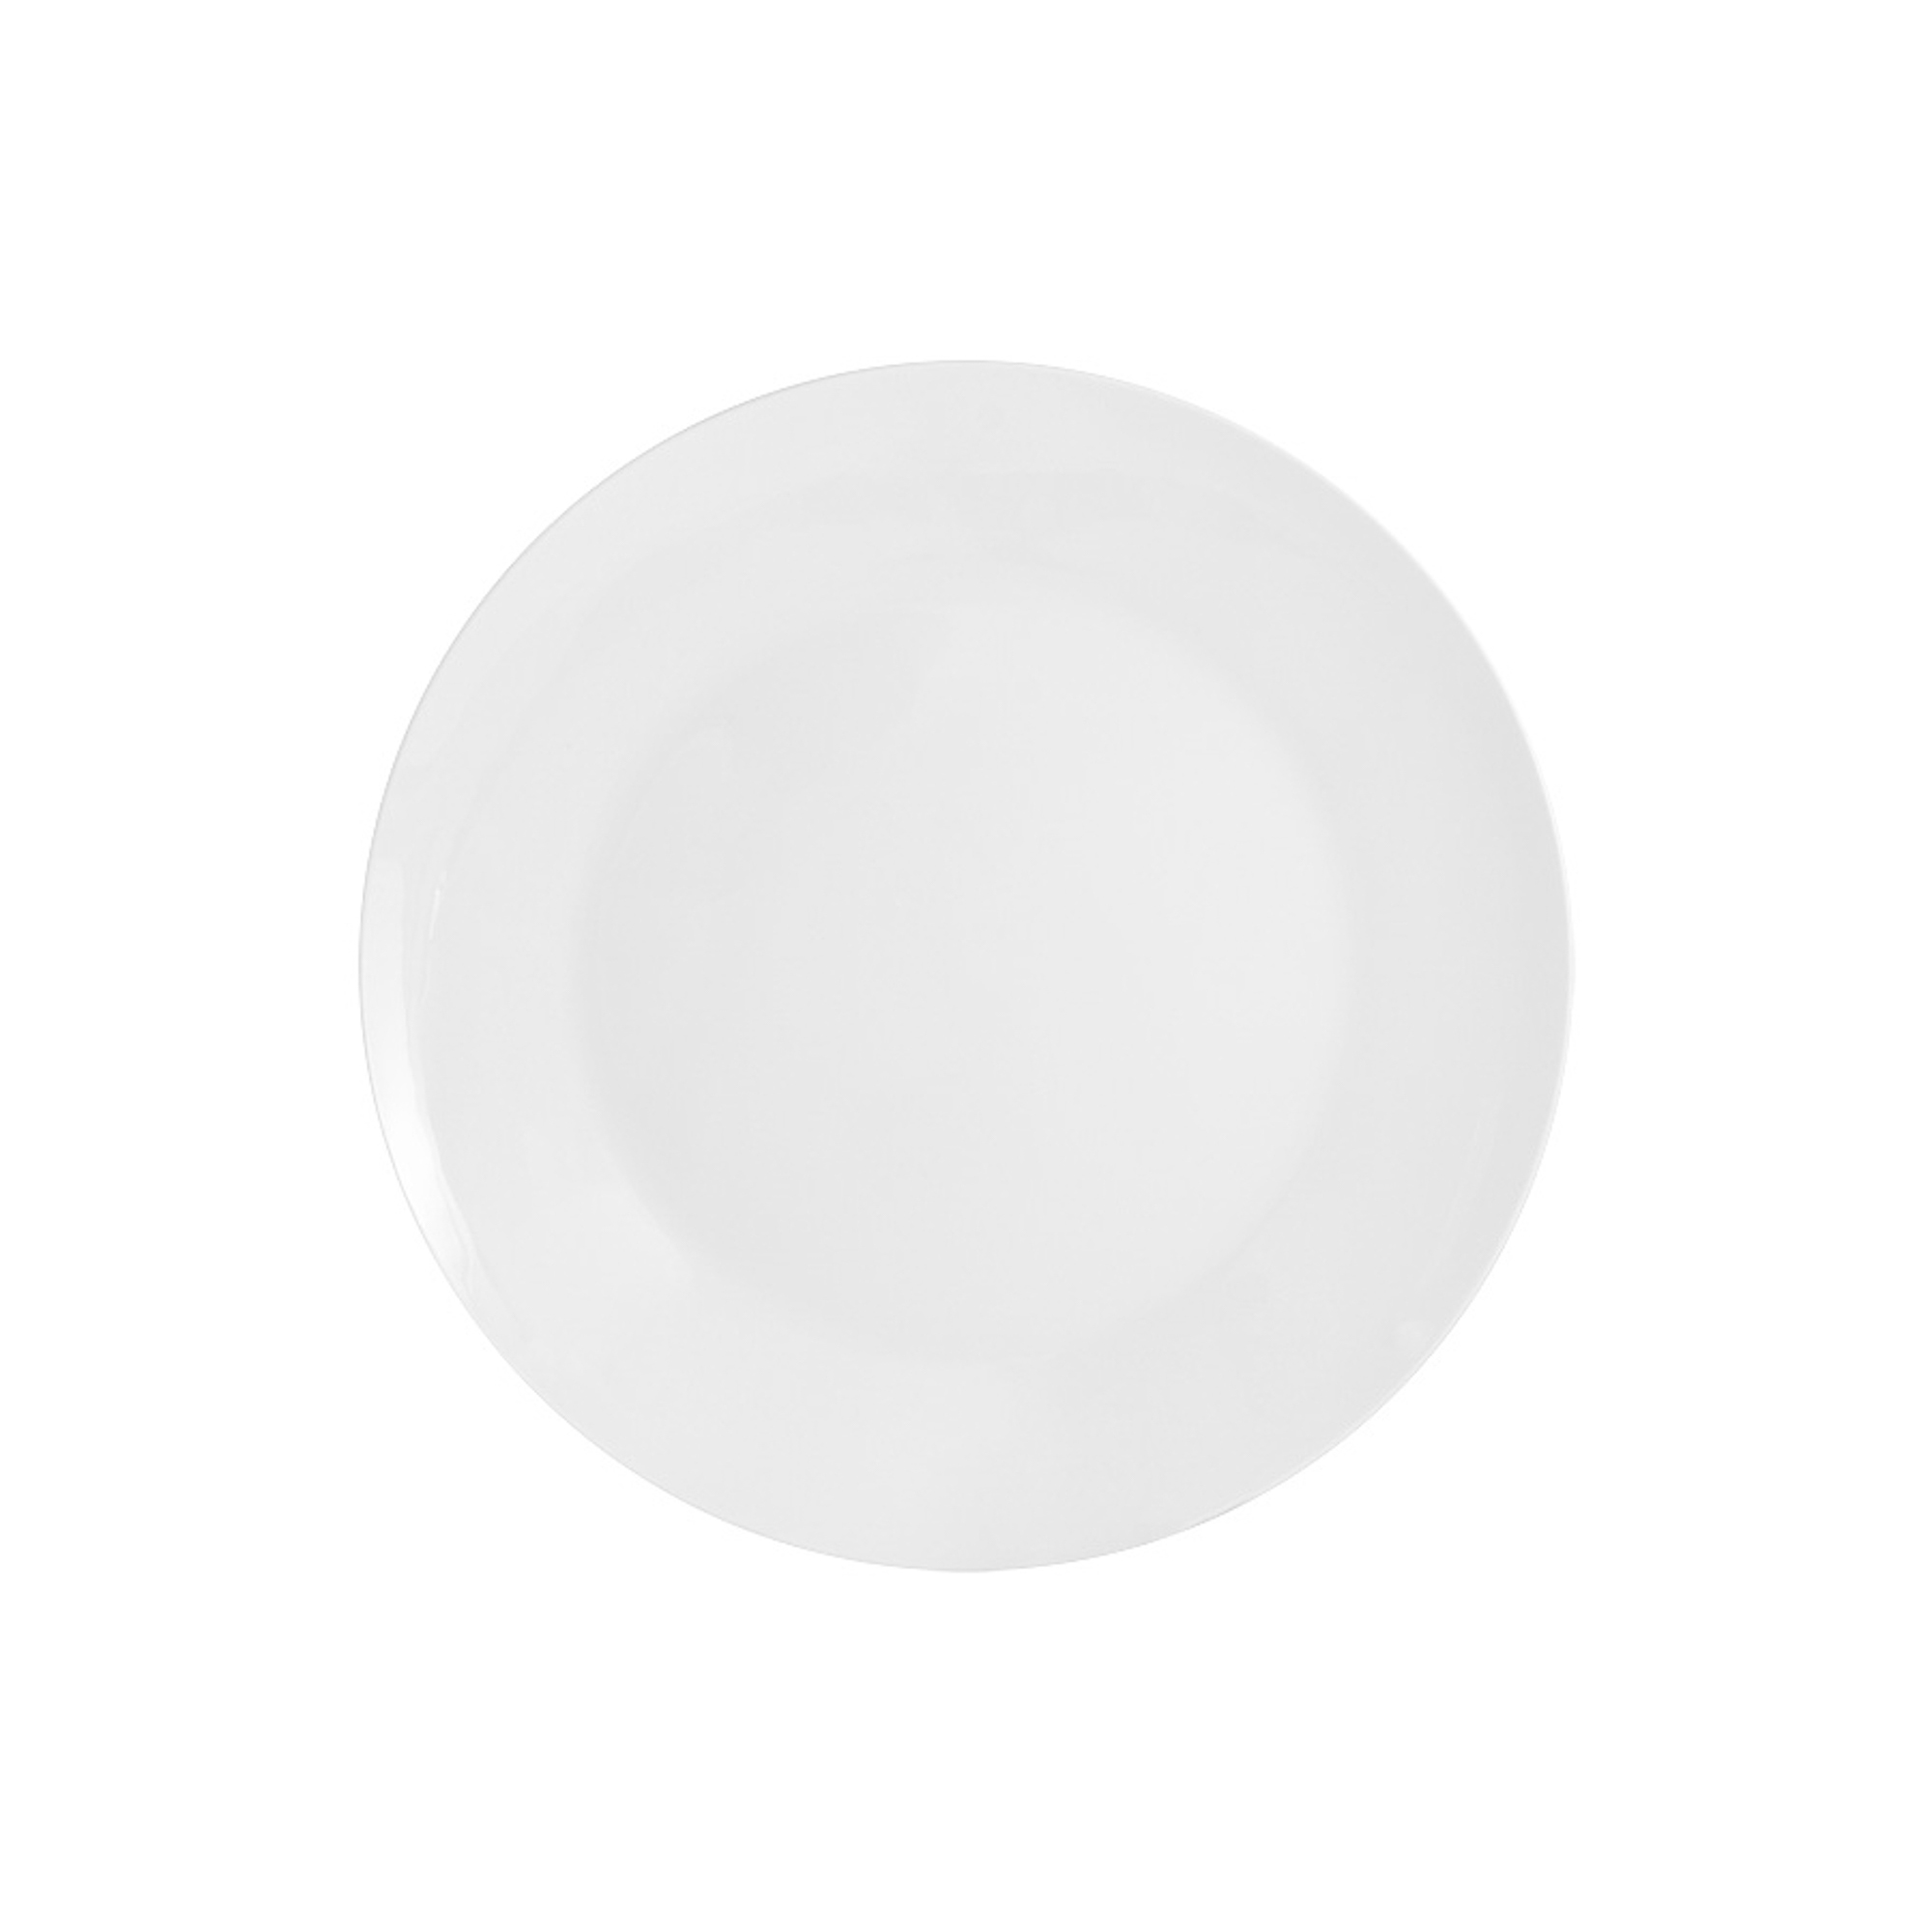 Тарелка обеденная Maxwell & Williams Кашемир 27 см тарелка обеденная maxwell